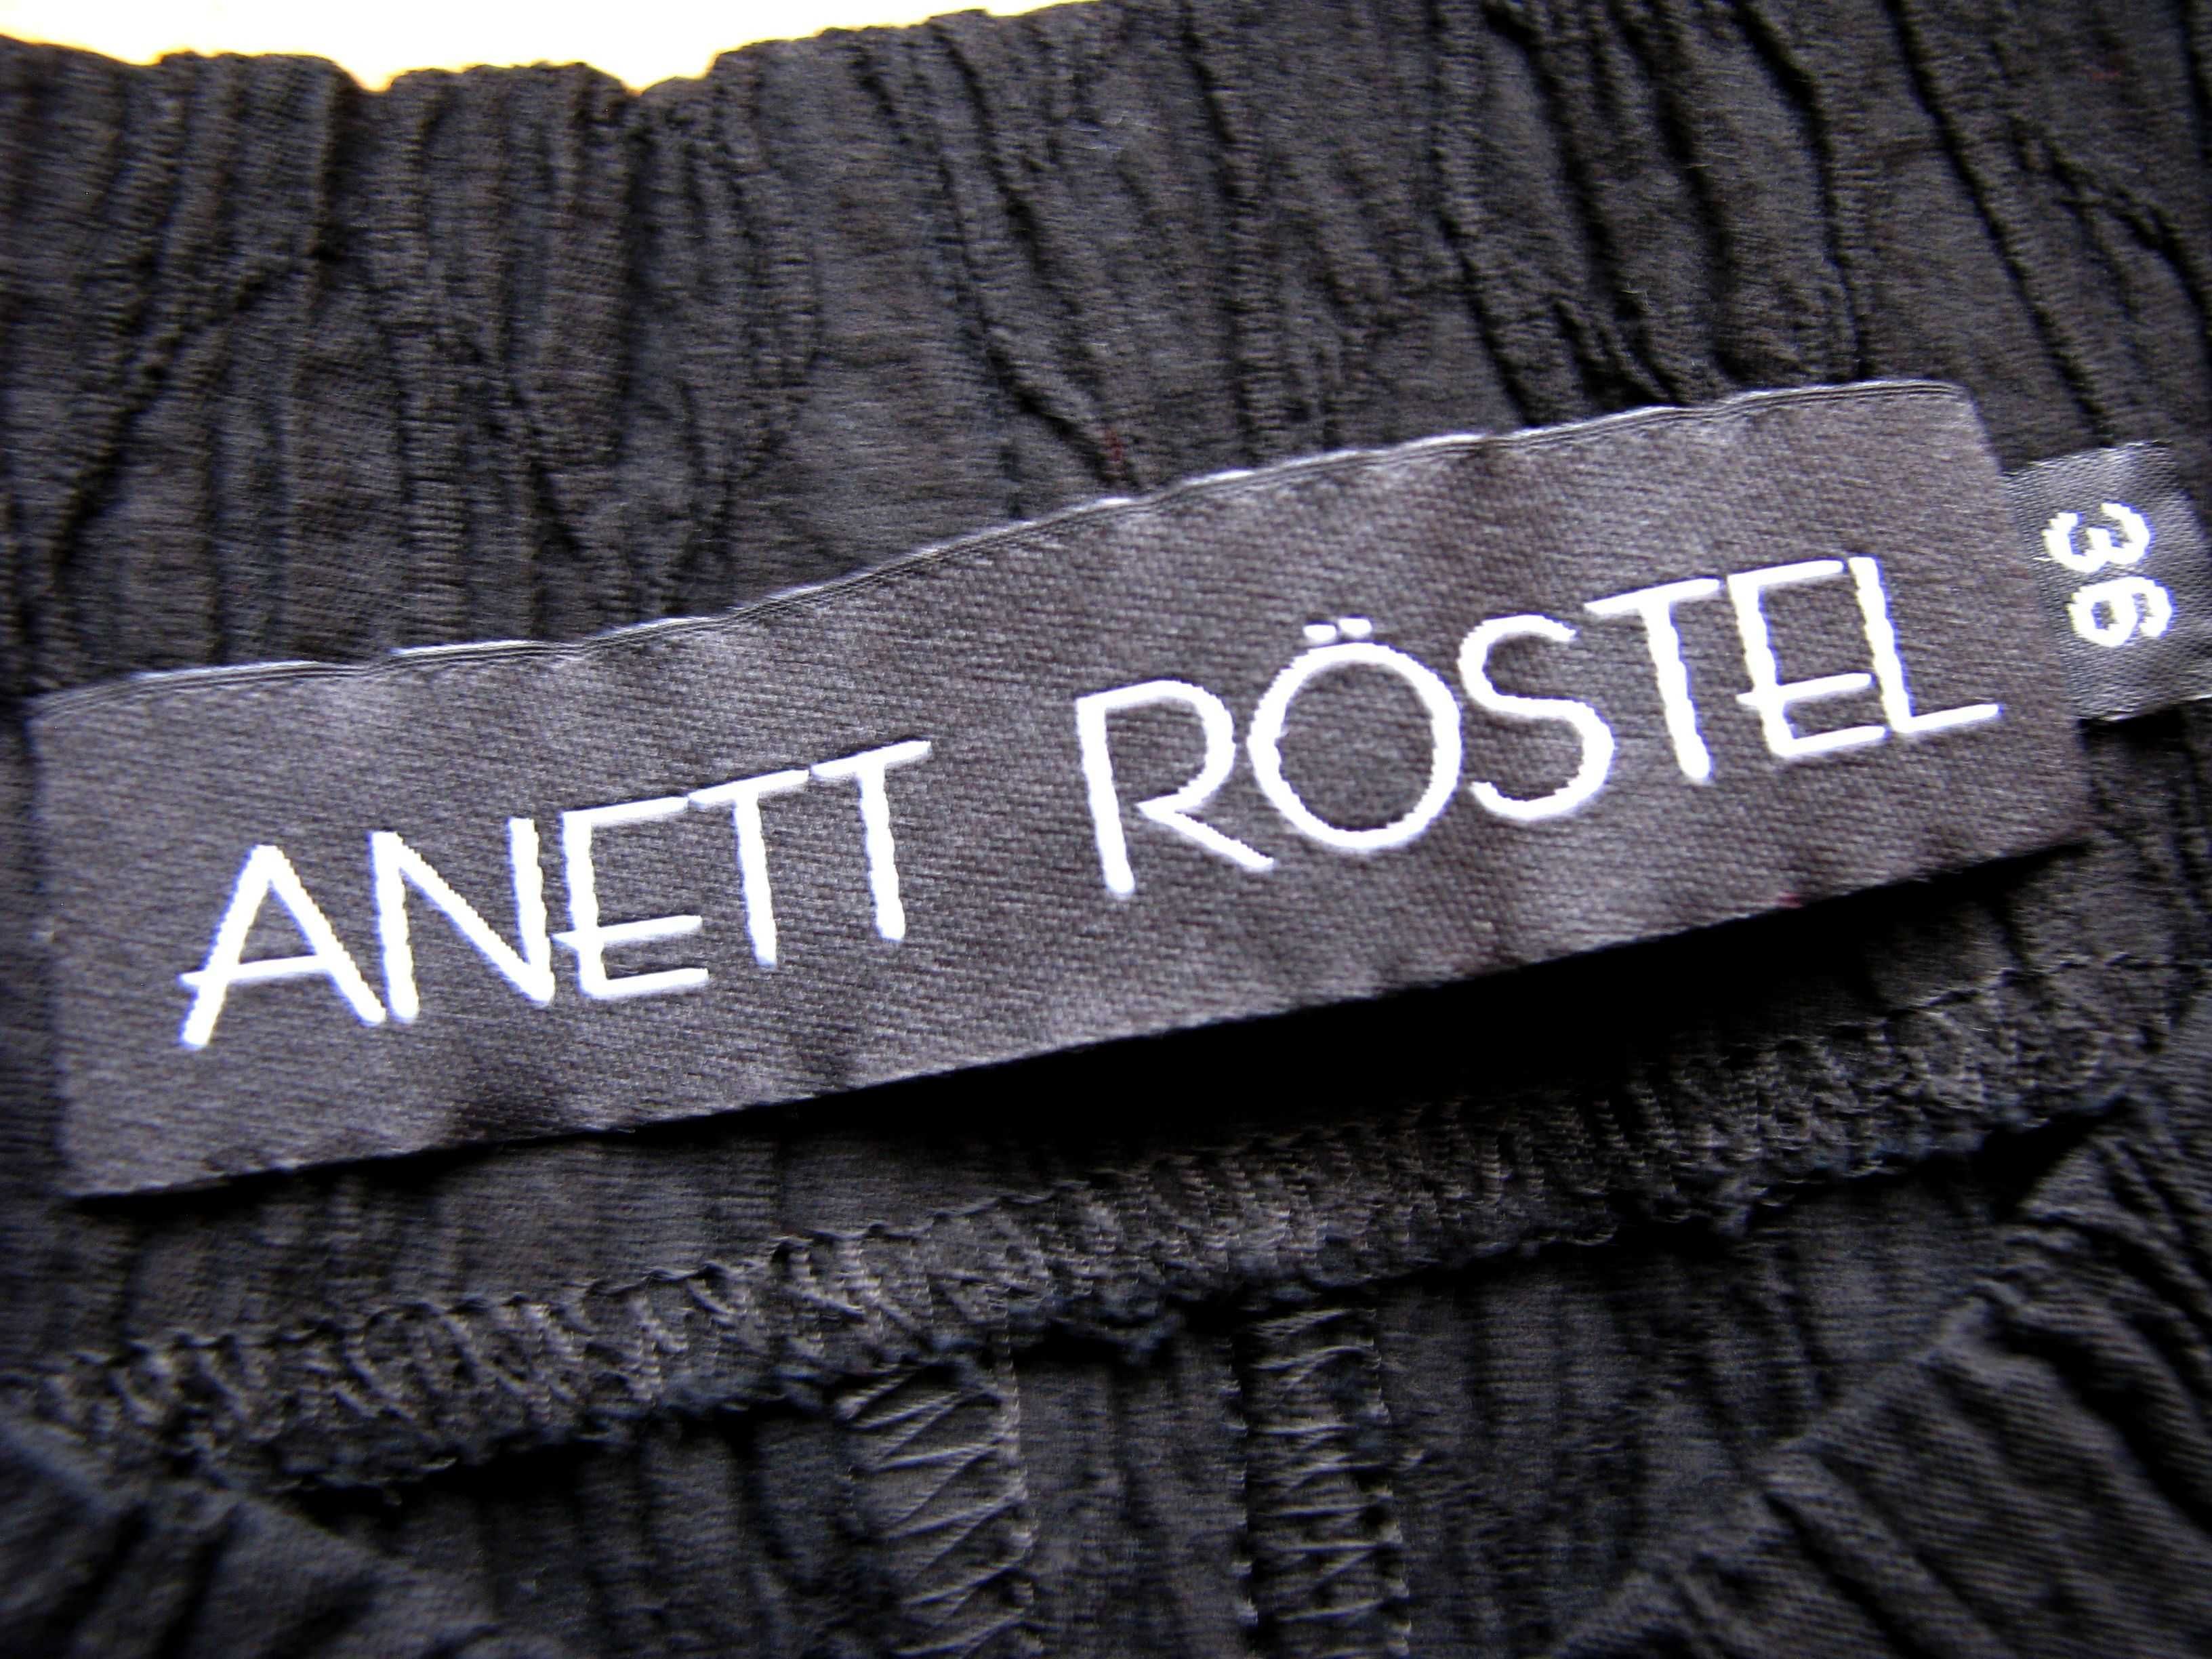 sukienka Anett Rostel 34 36 38 awangarda vintage etno boho czarna